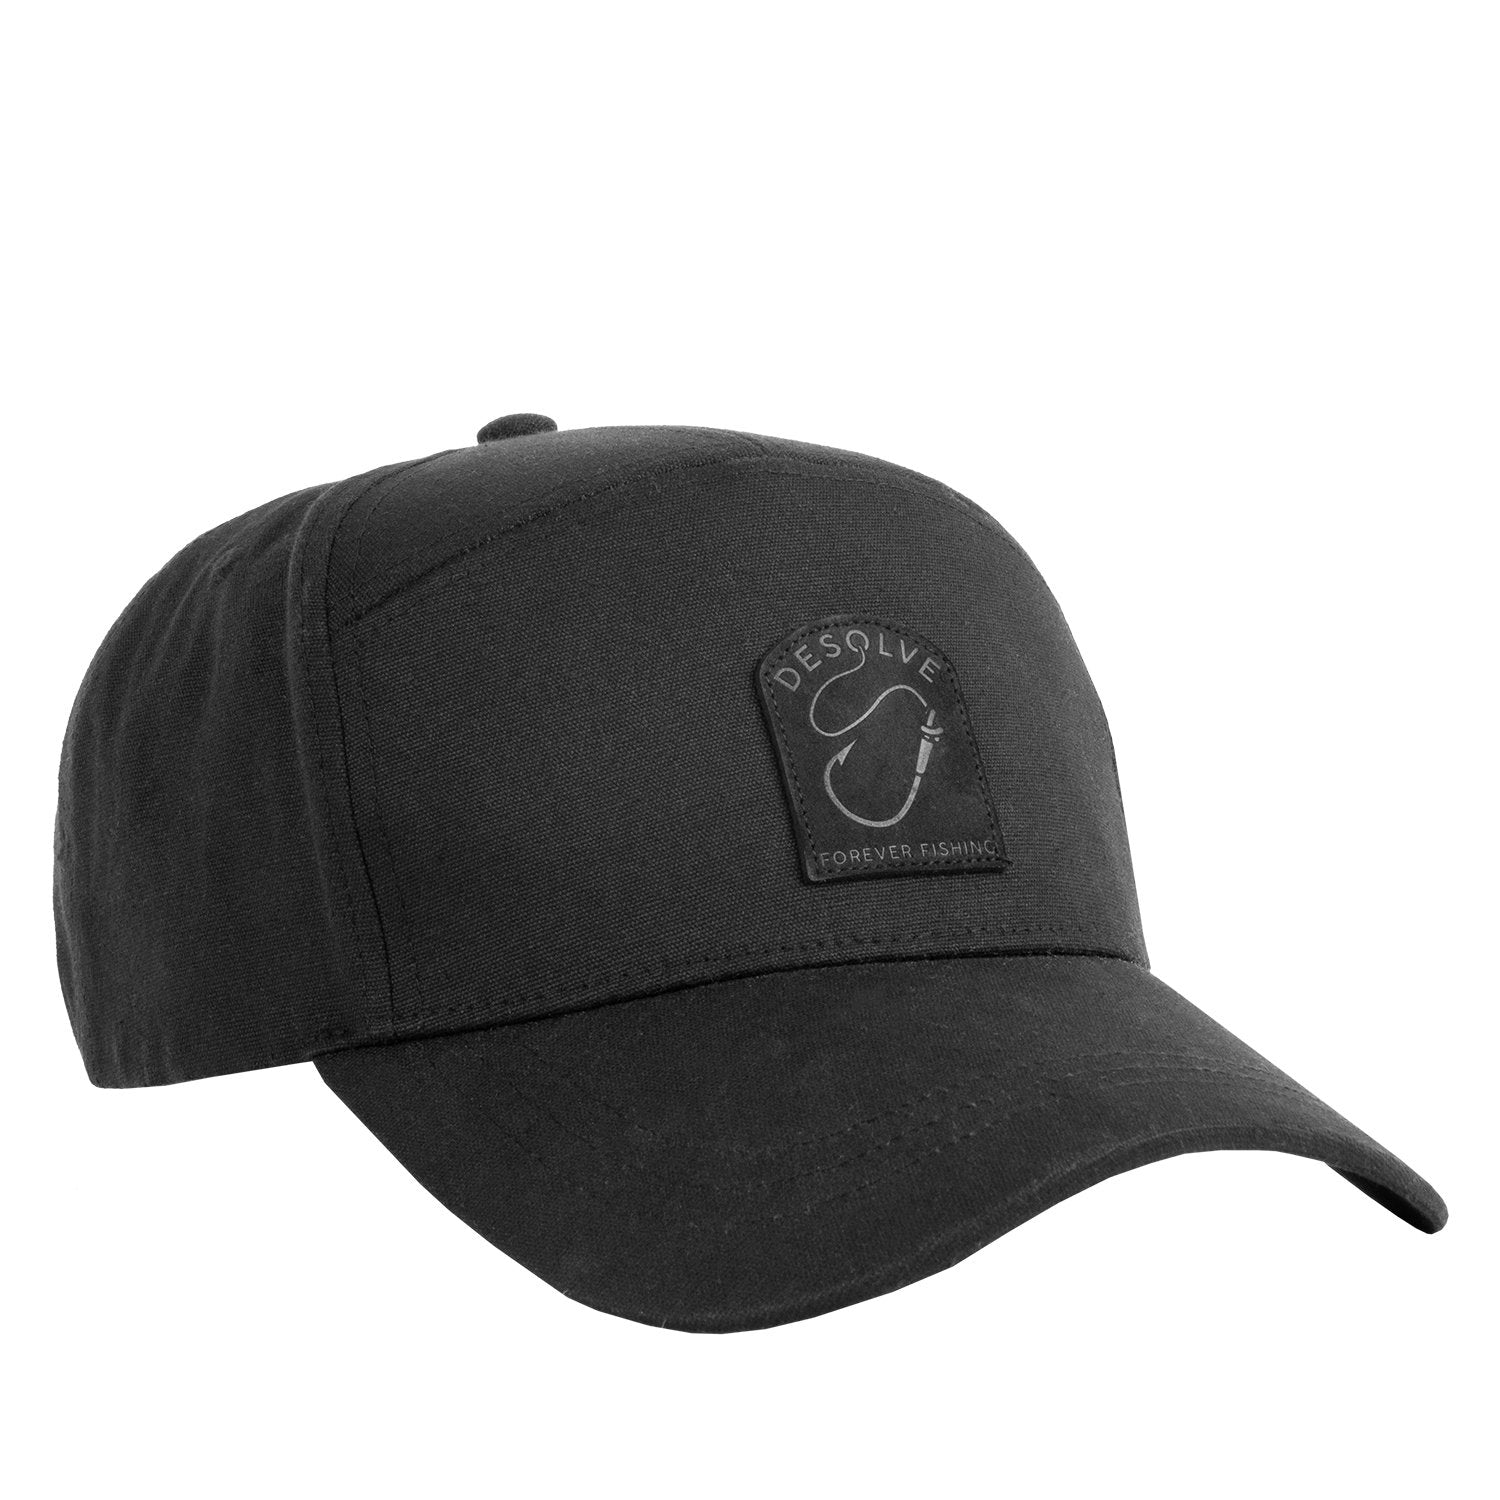 Desolve Supply Co, Snappy Straw Hat, 100% Rush Straw